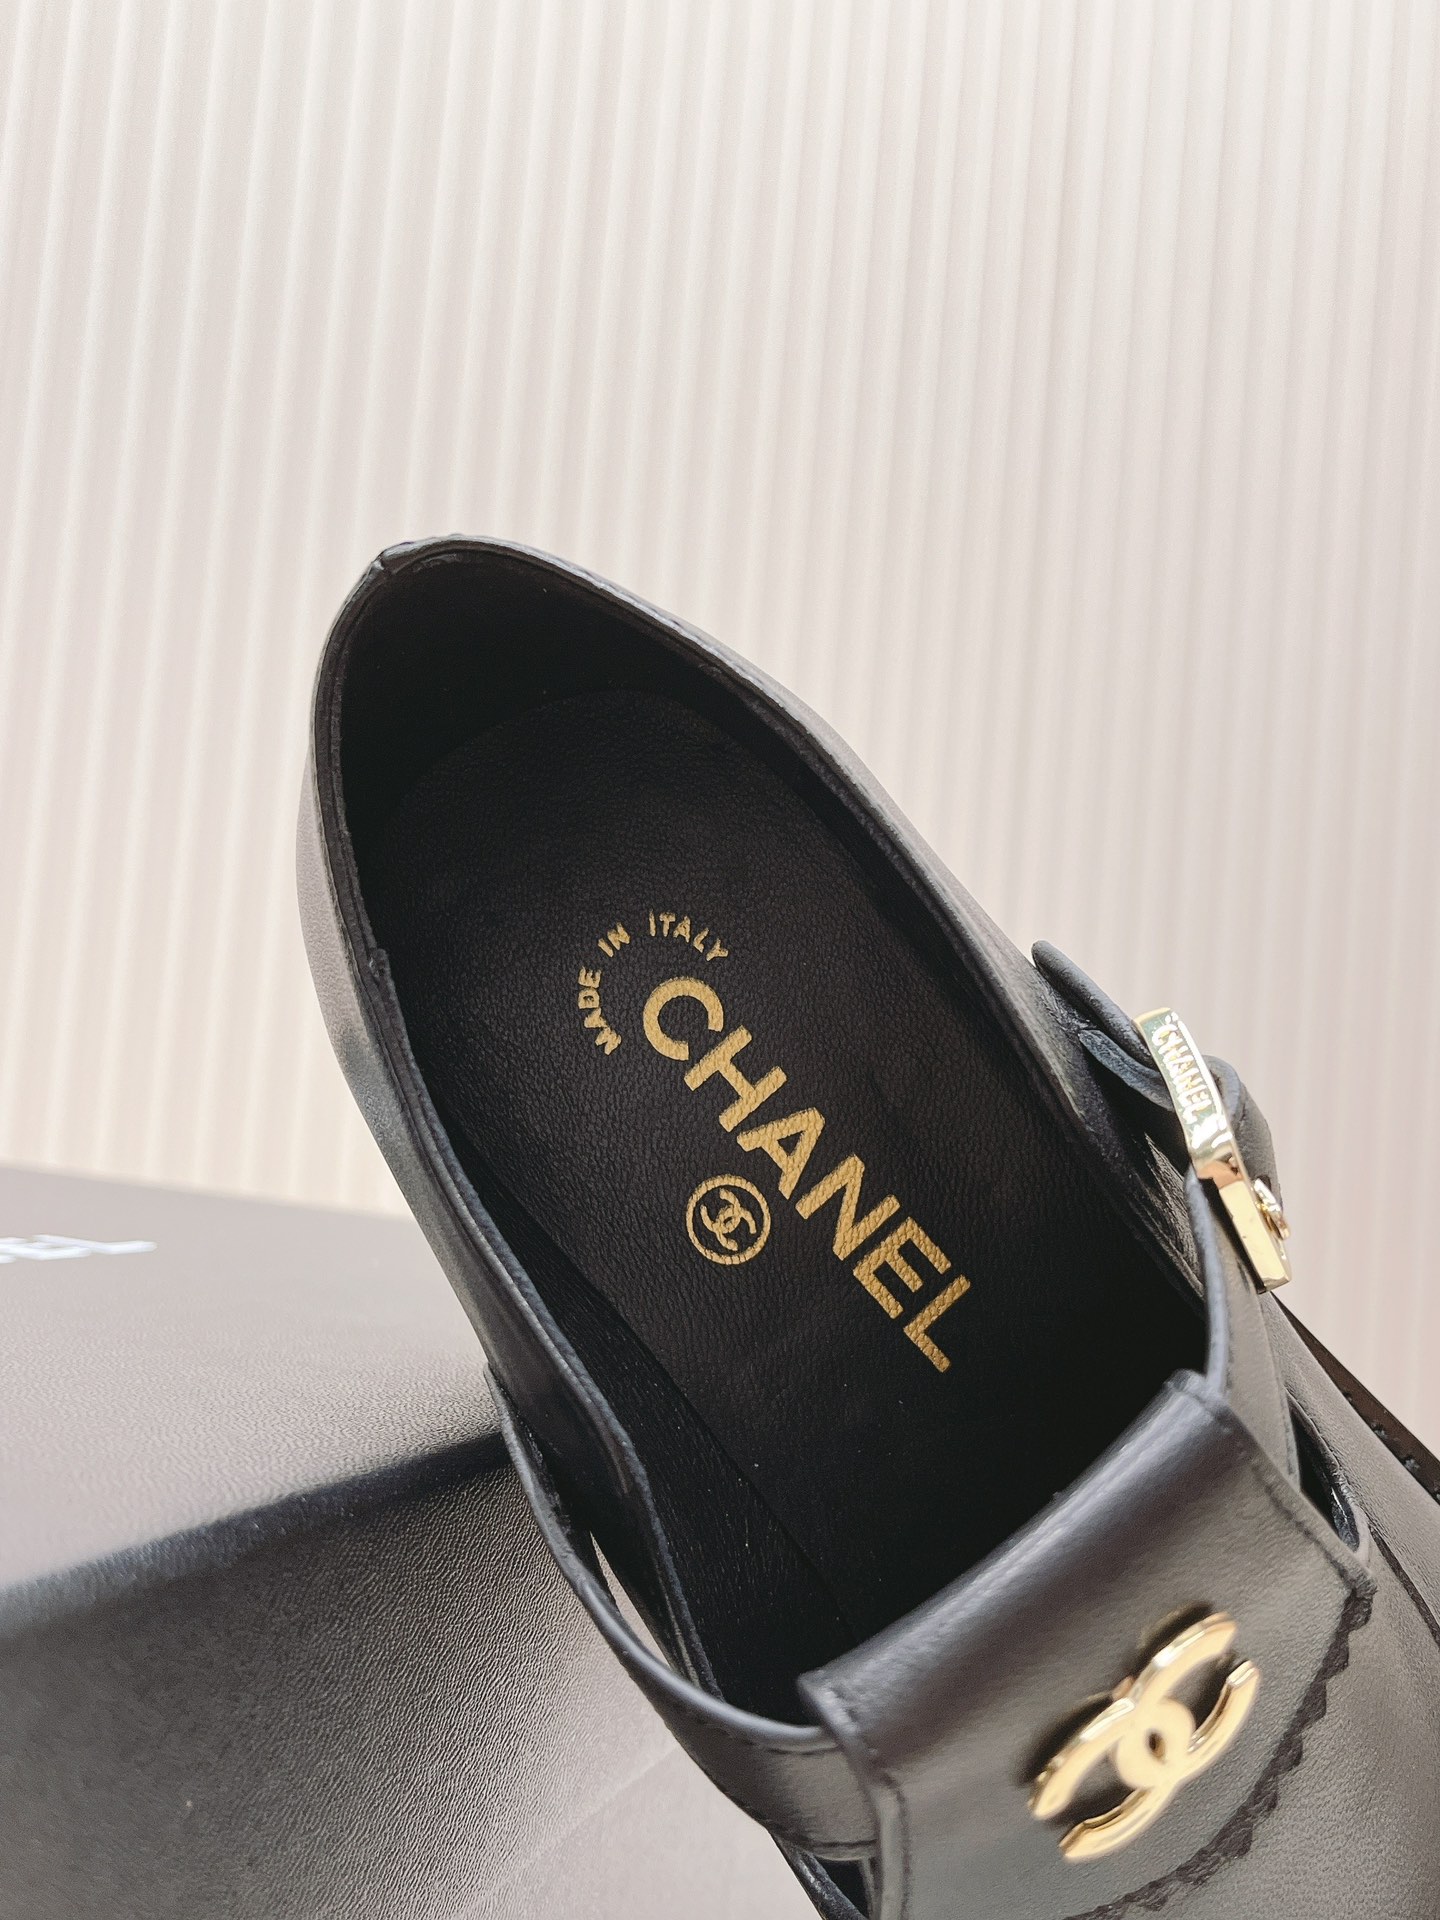 CHANELシャネルの靴Ｎ級品 レザー ファッション ローファーシンプル 厚い靴底 歩きやすい ブラック_7